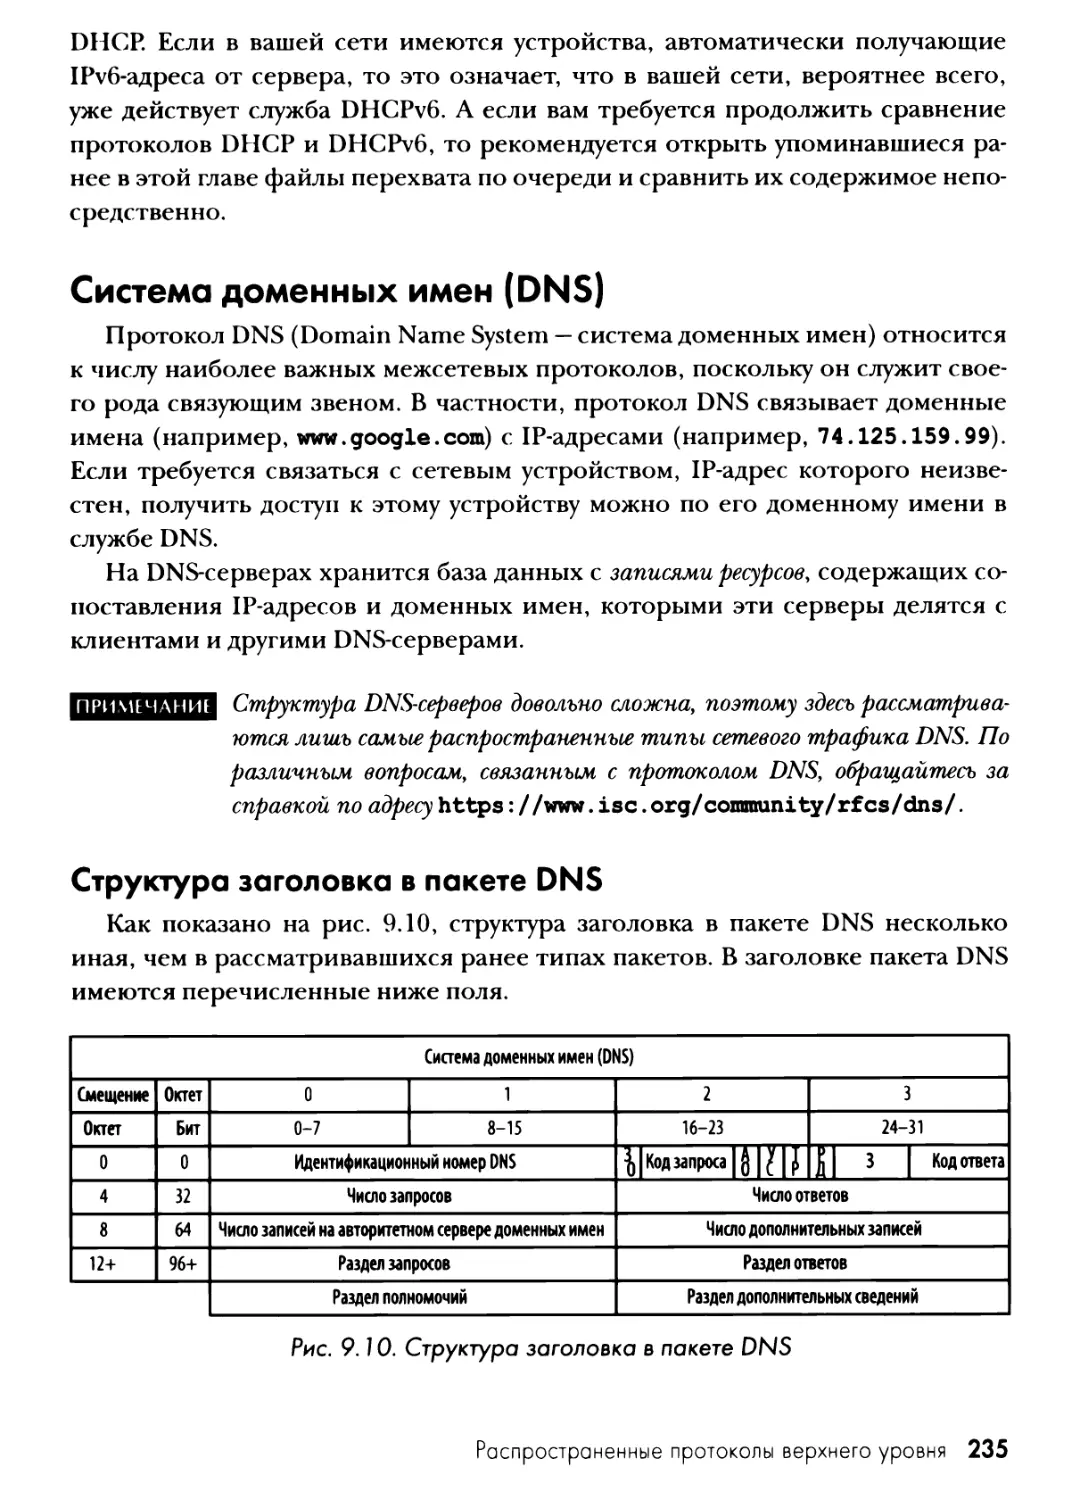 Система доменных имен (DNS)
Структура заголовка в пакете DNS